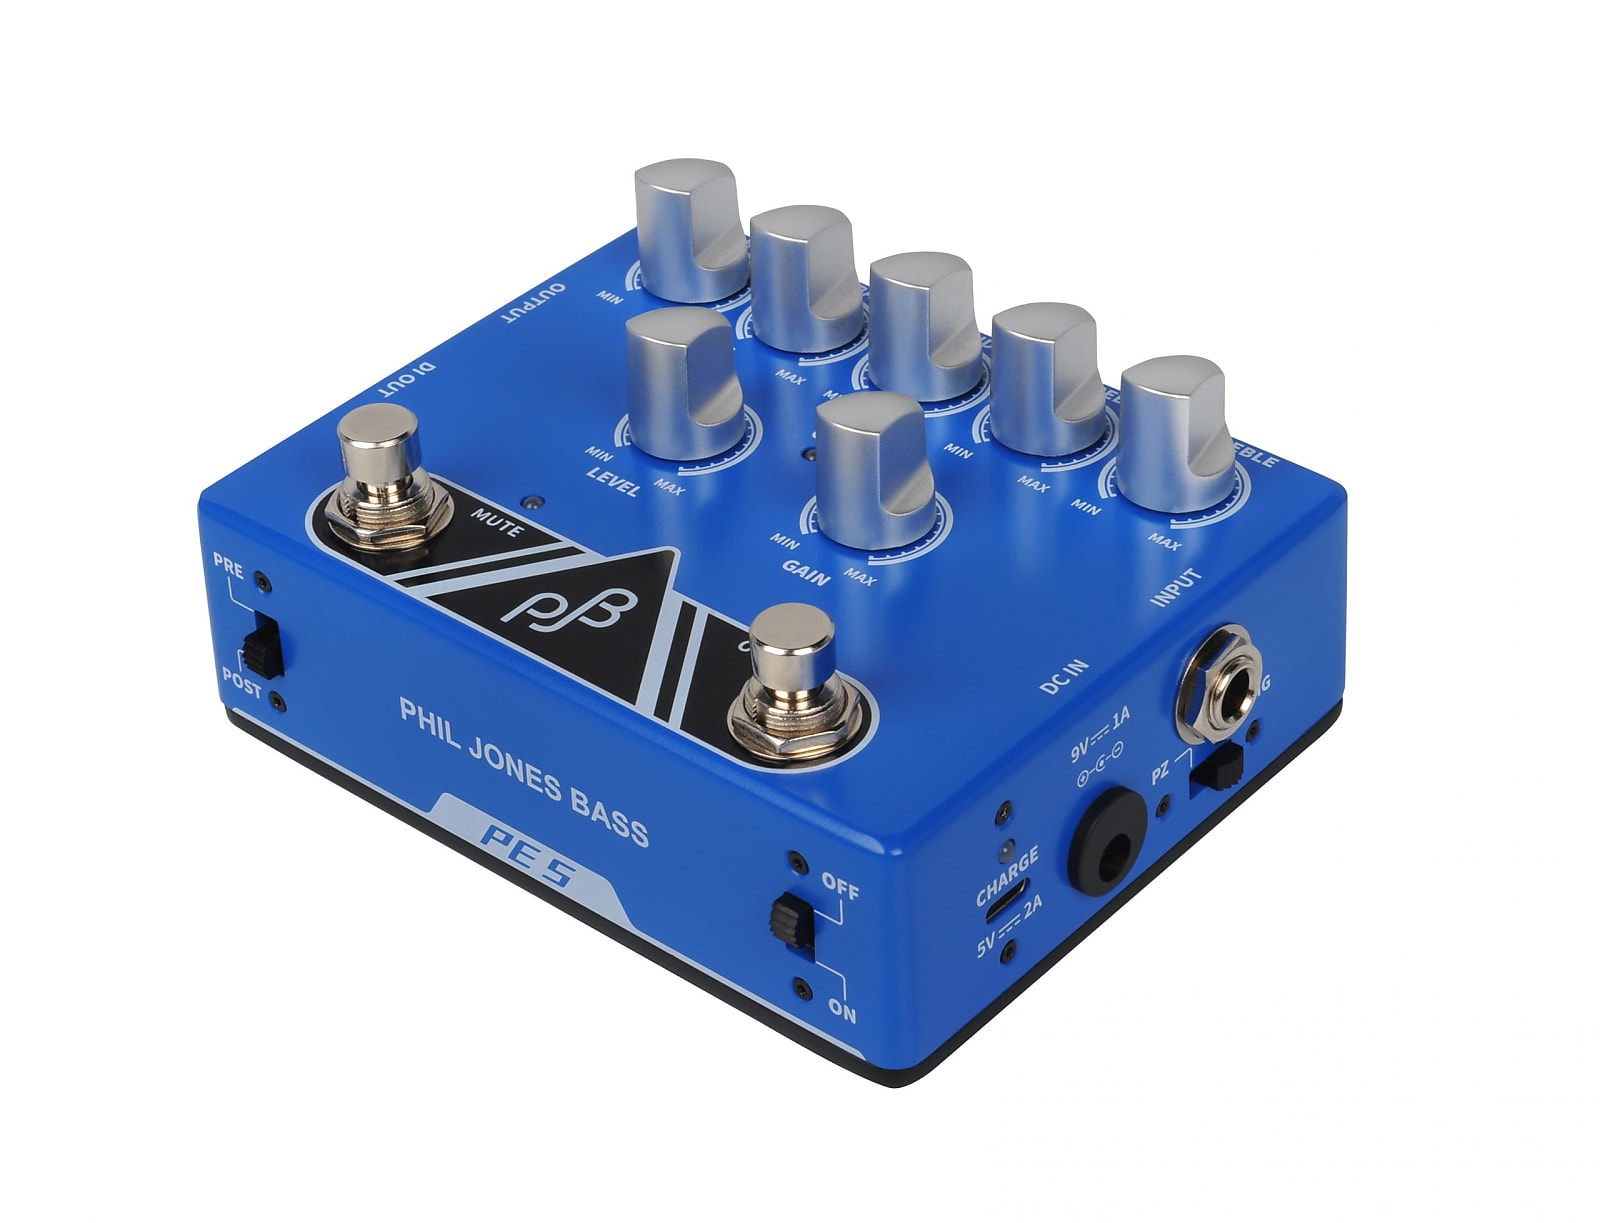 Phil Jones PE-5 Bass EQ / Pre-Amp / Direct Box / Boost Pedal